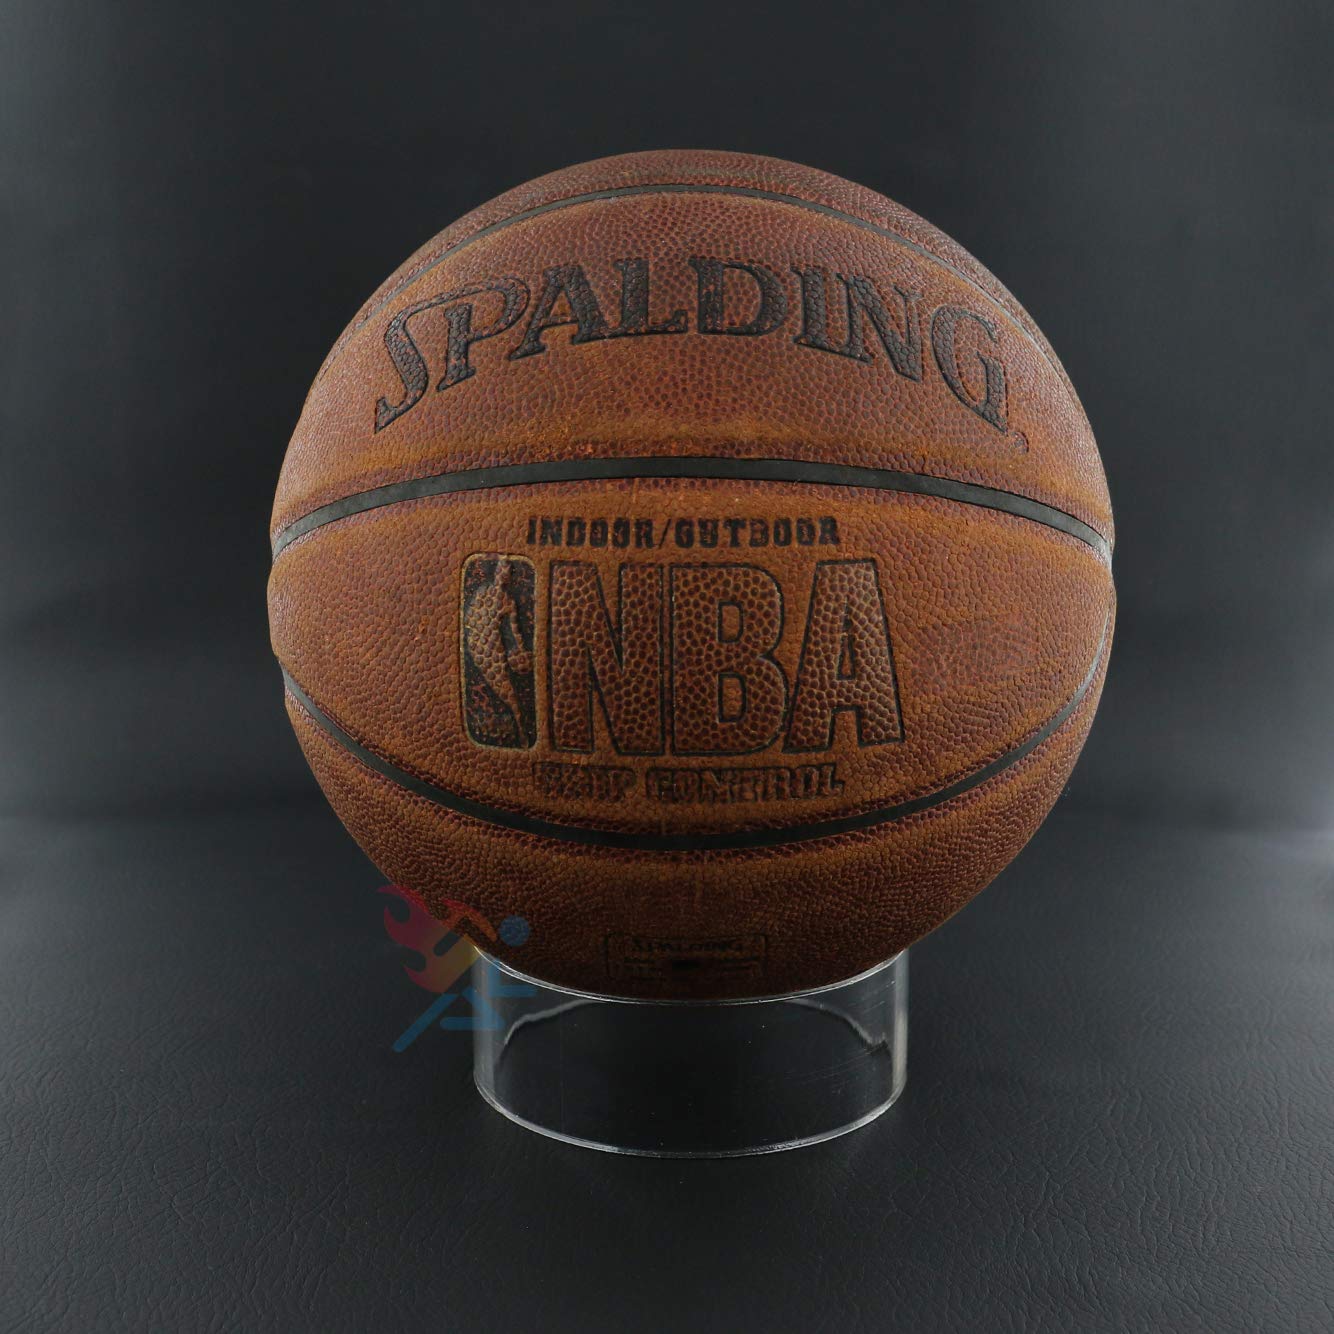 5 x 1.75 inch Acrylic Sports Ball Display Ring Pedestal Basketball Volleyball Bowling Ball